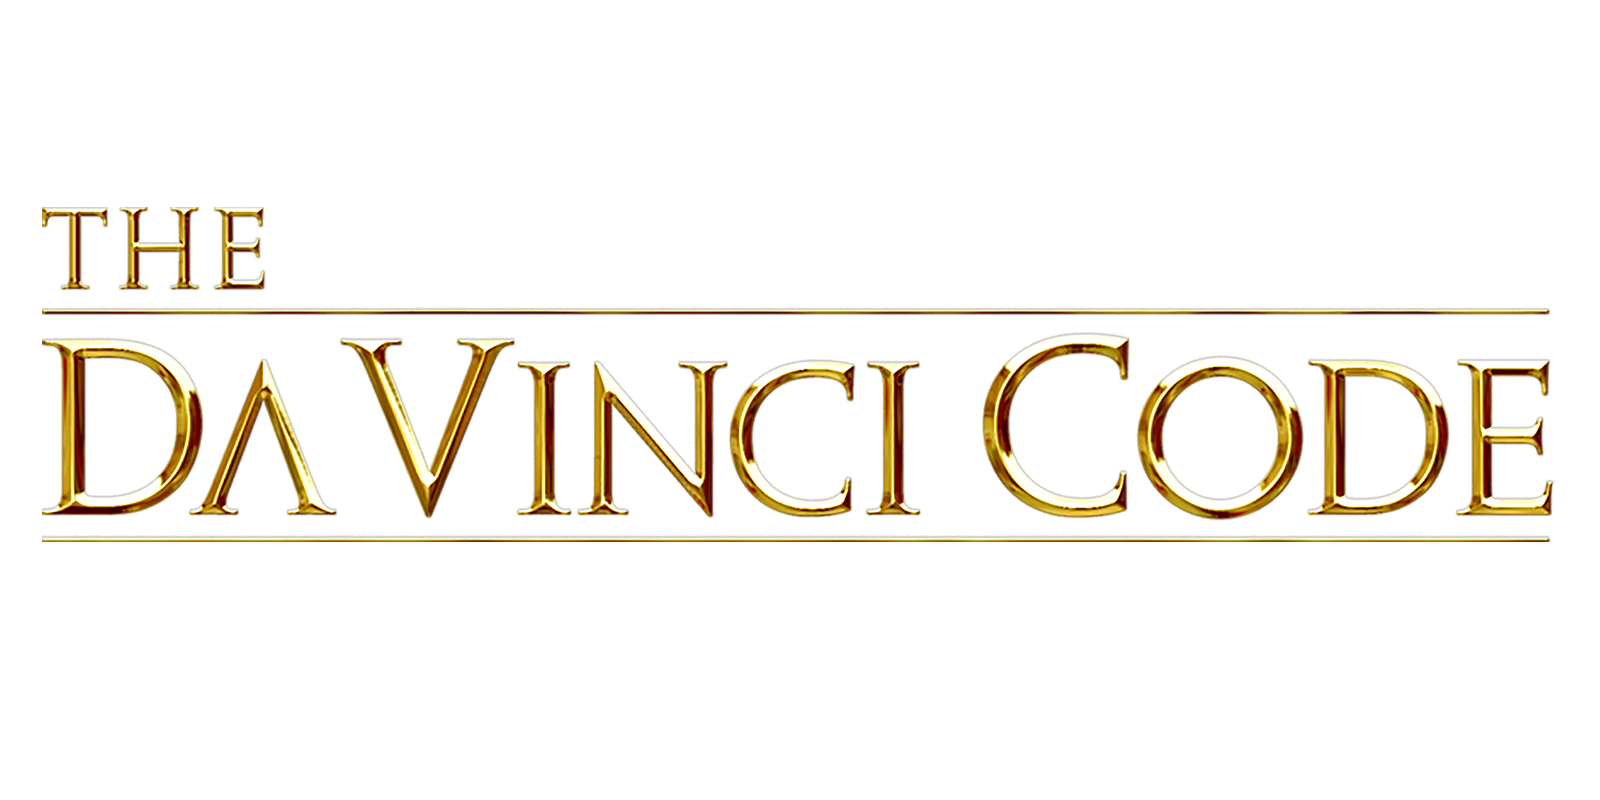 download the da vinci code full movie free